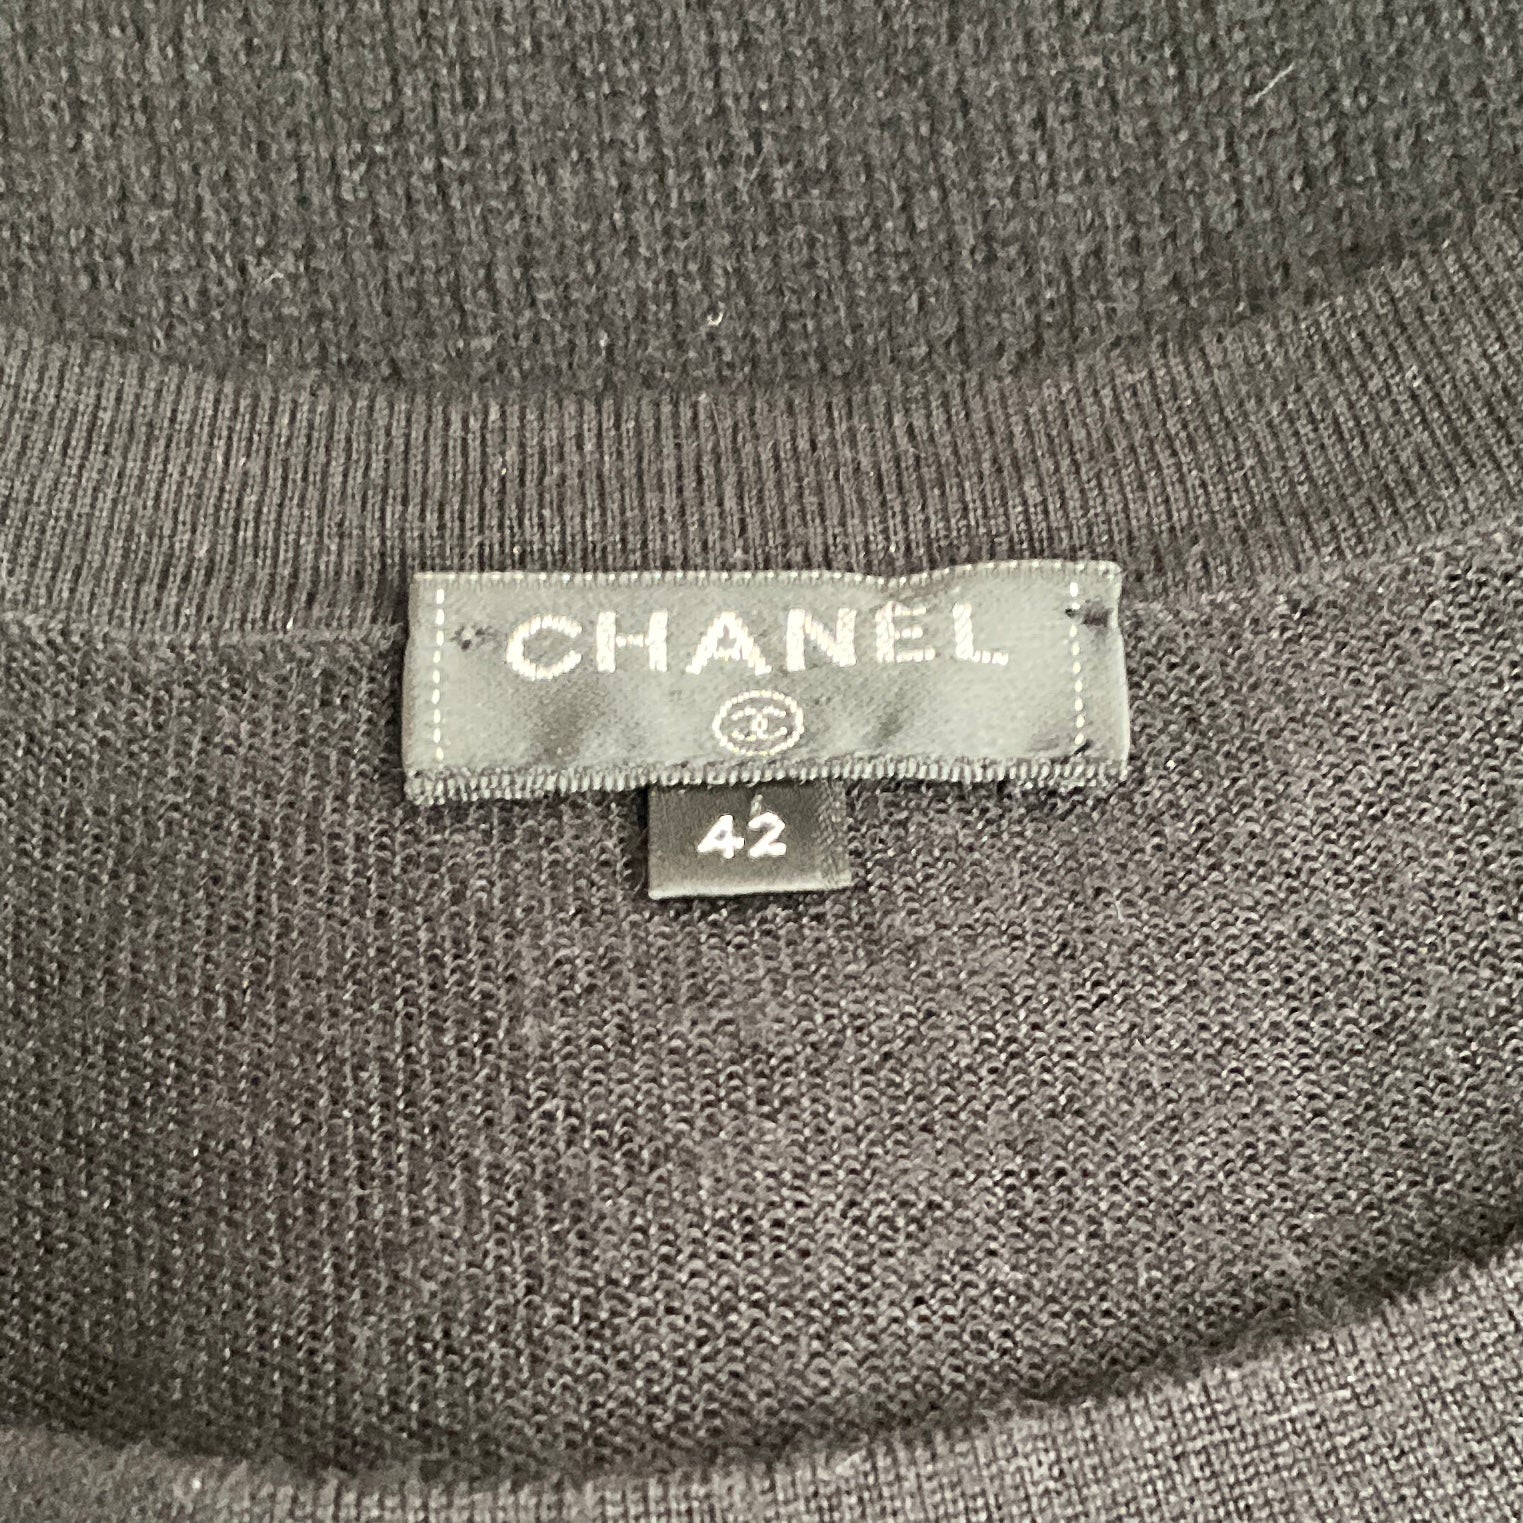 Chanel Black Cashmere Sweater with Tie Waist